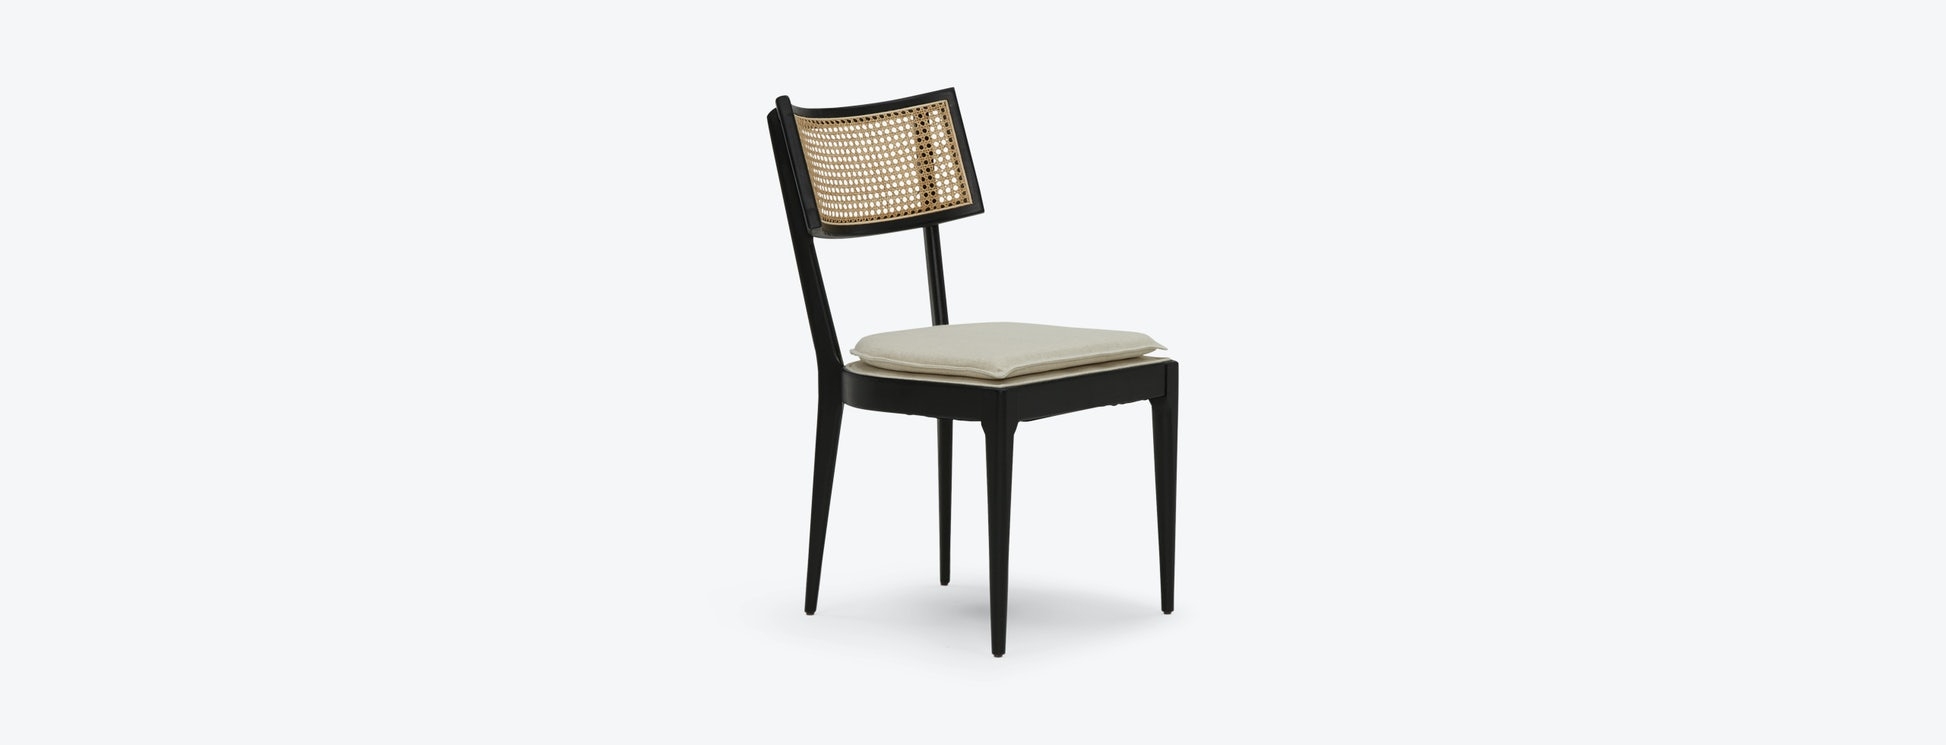 Errol Dining Chair - Image 1